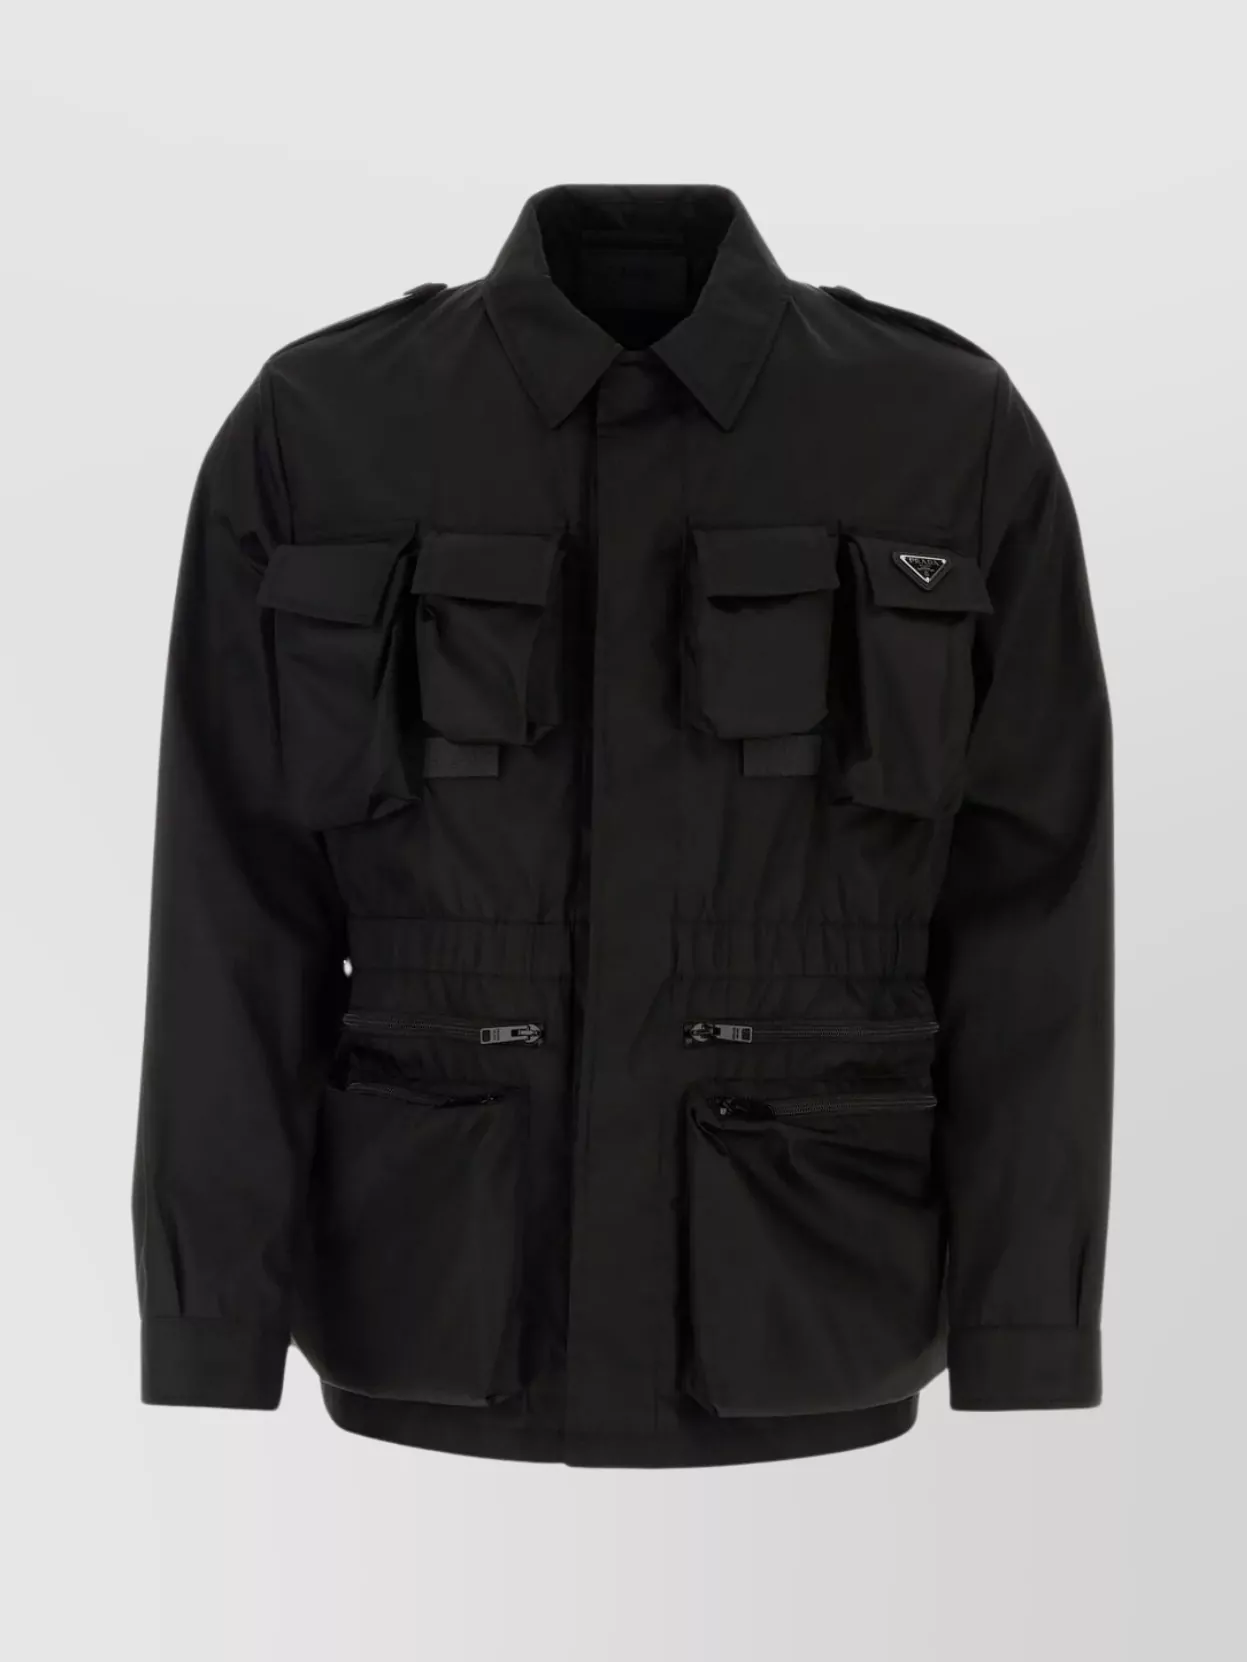 Prada Jacket Featuring Adjustable Waist And Multiple Pockets In Black